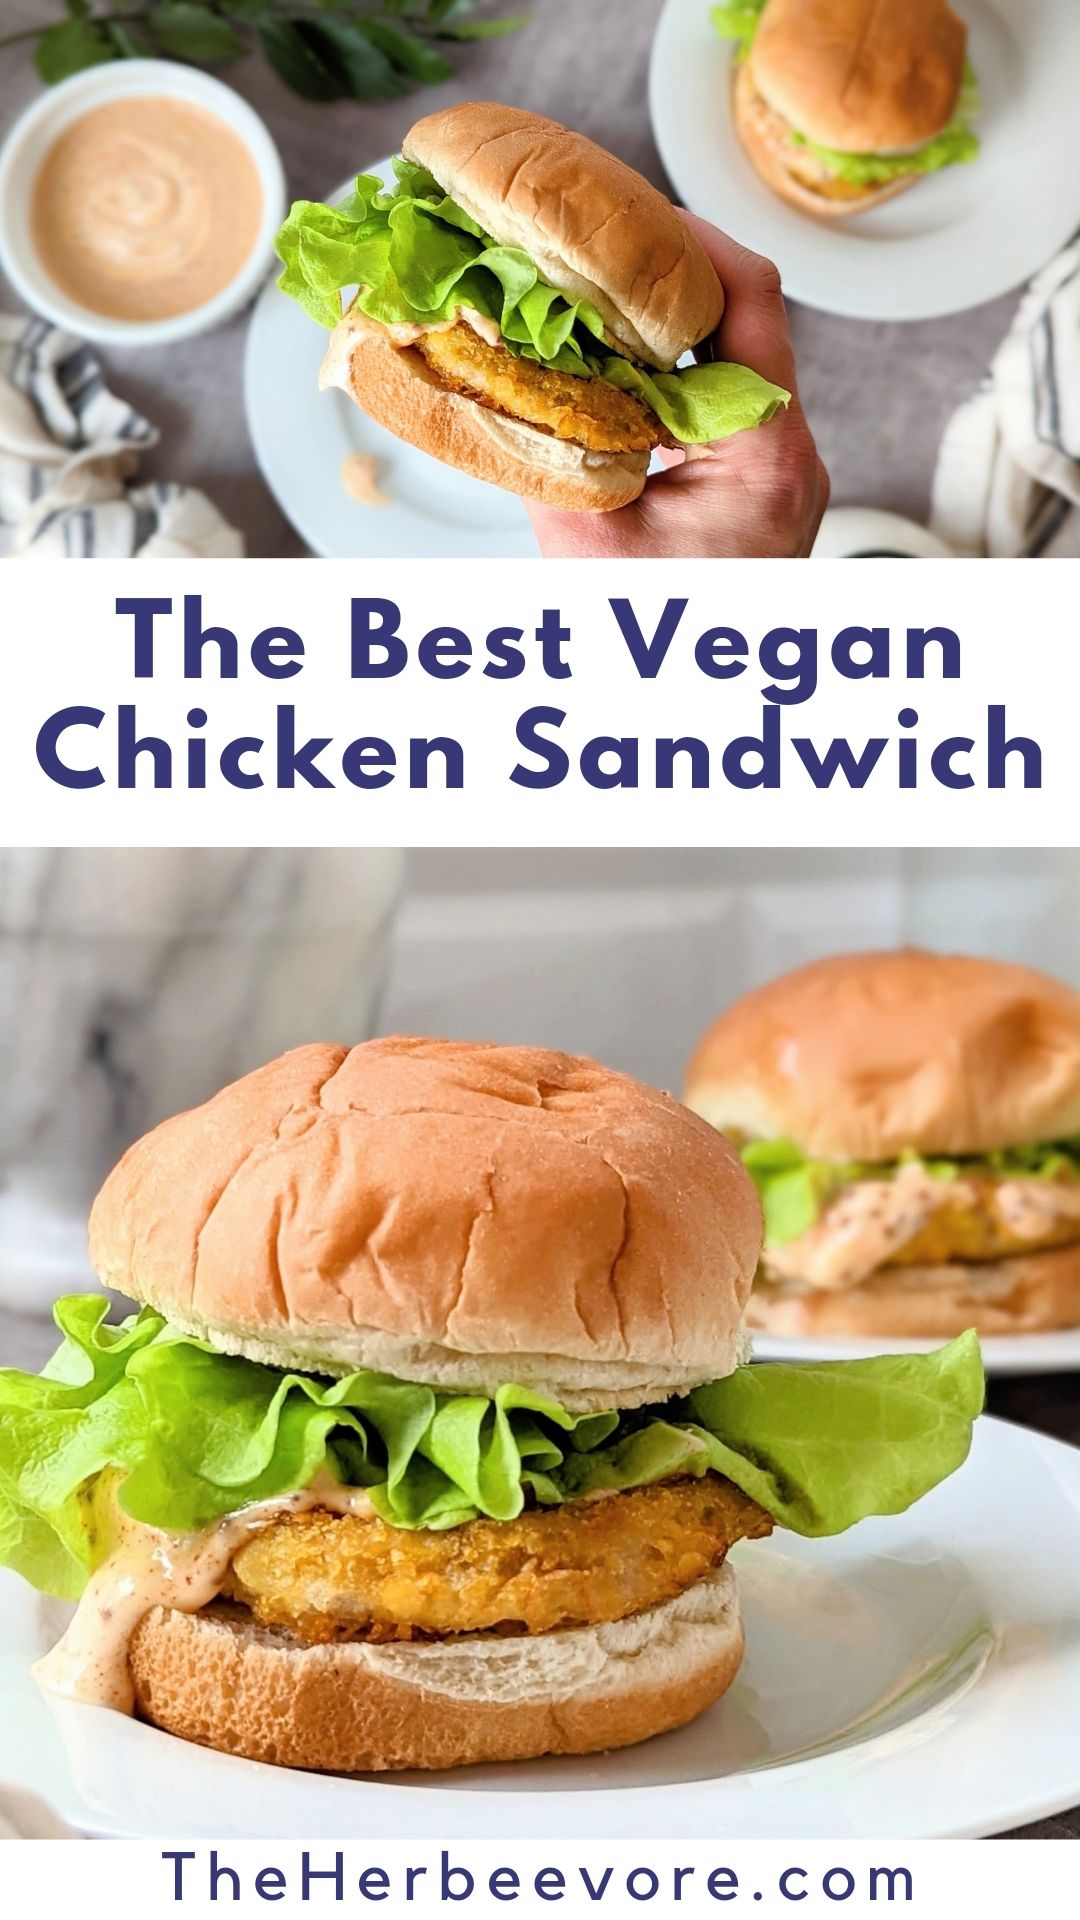 vegetarian chicken sandwich recipe plant based chicken substitute sandwich with chicken patty vegan meatless chicken sandwich for vegetarians